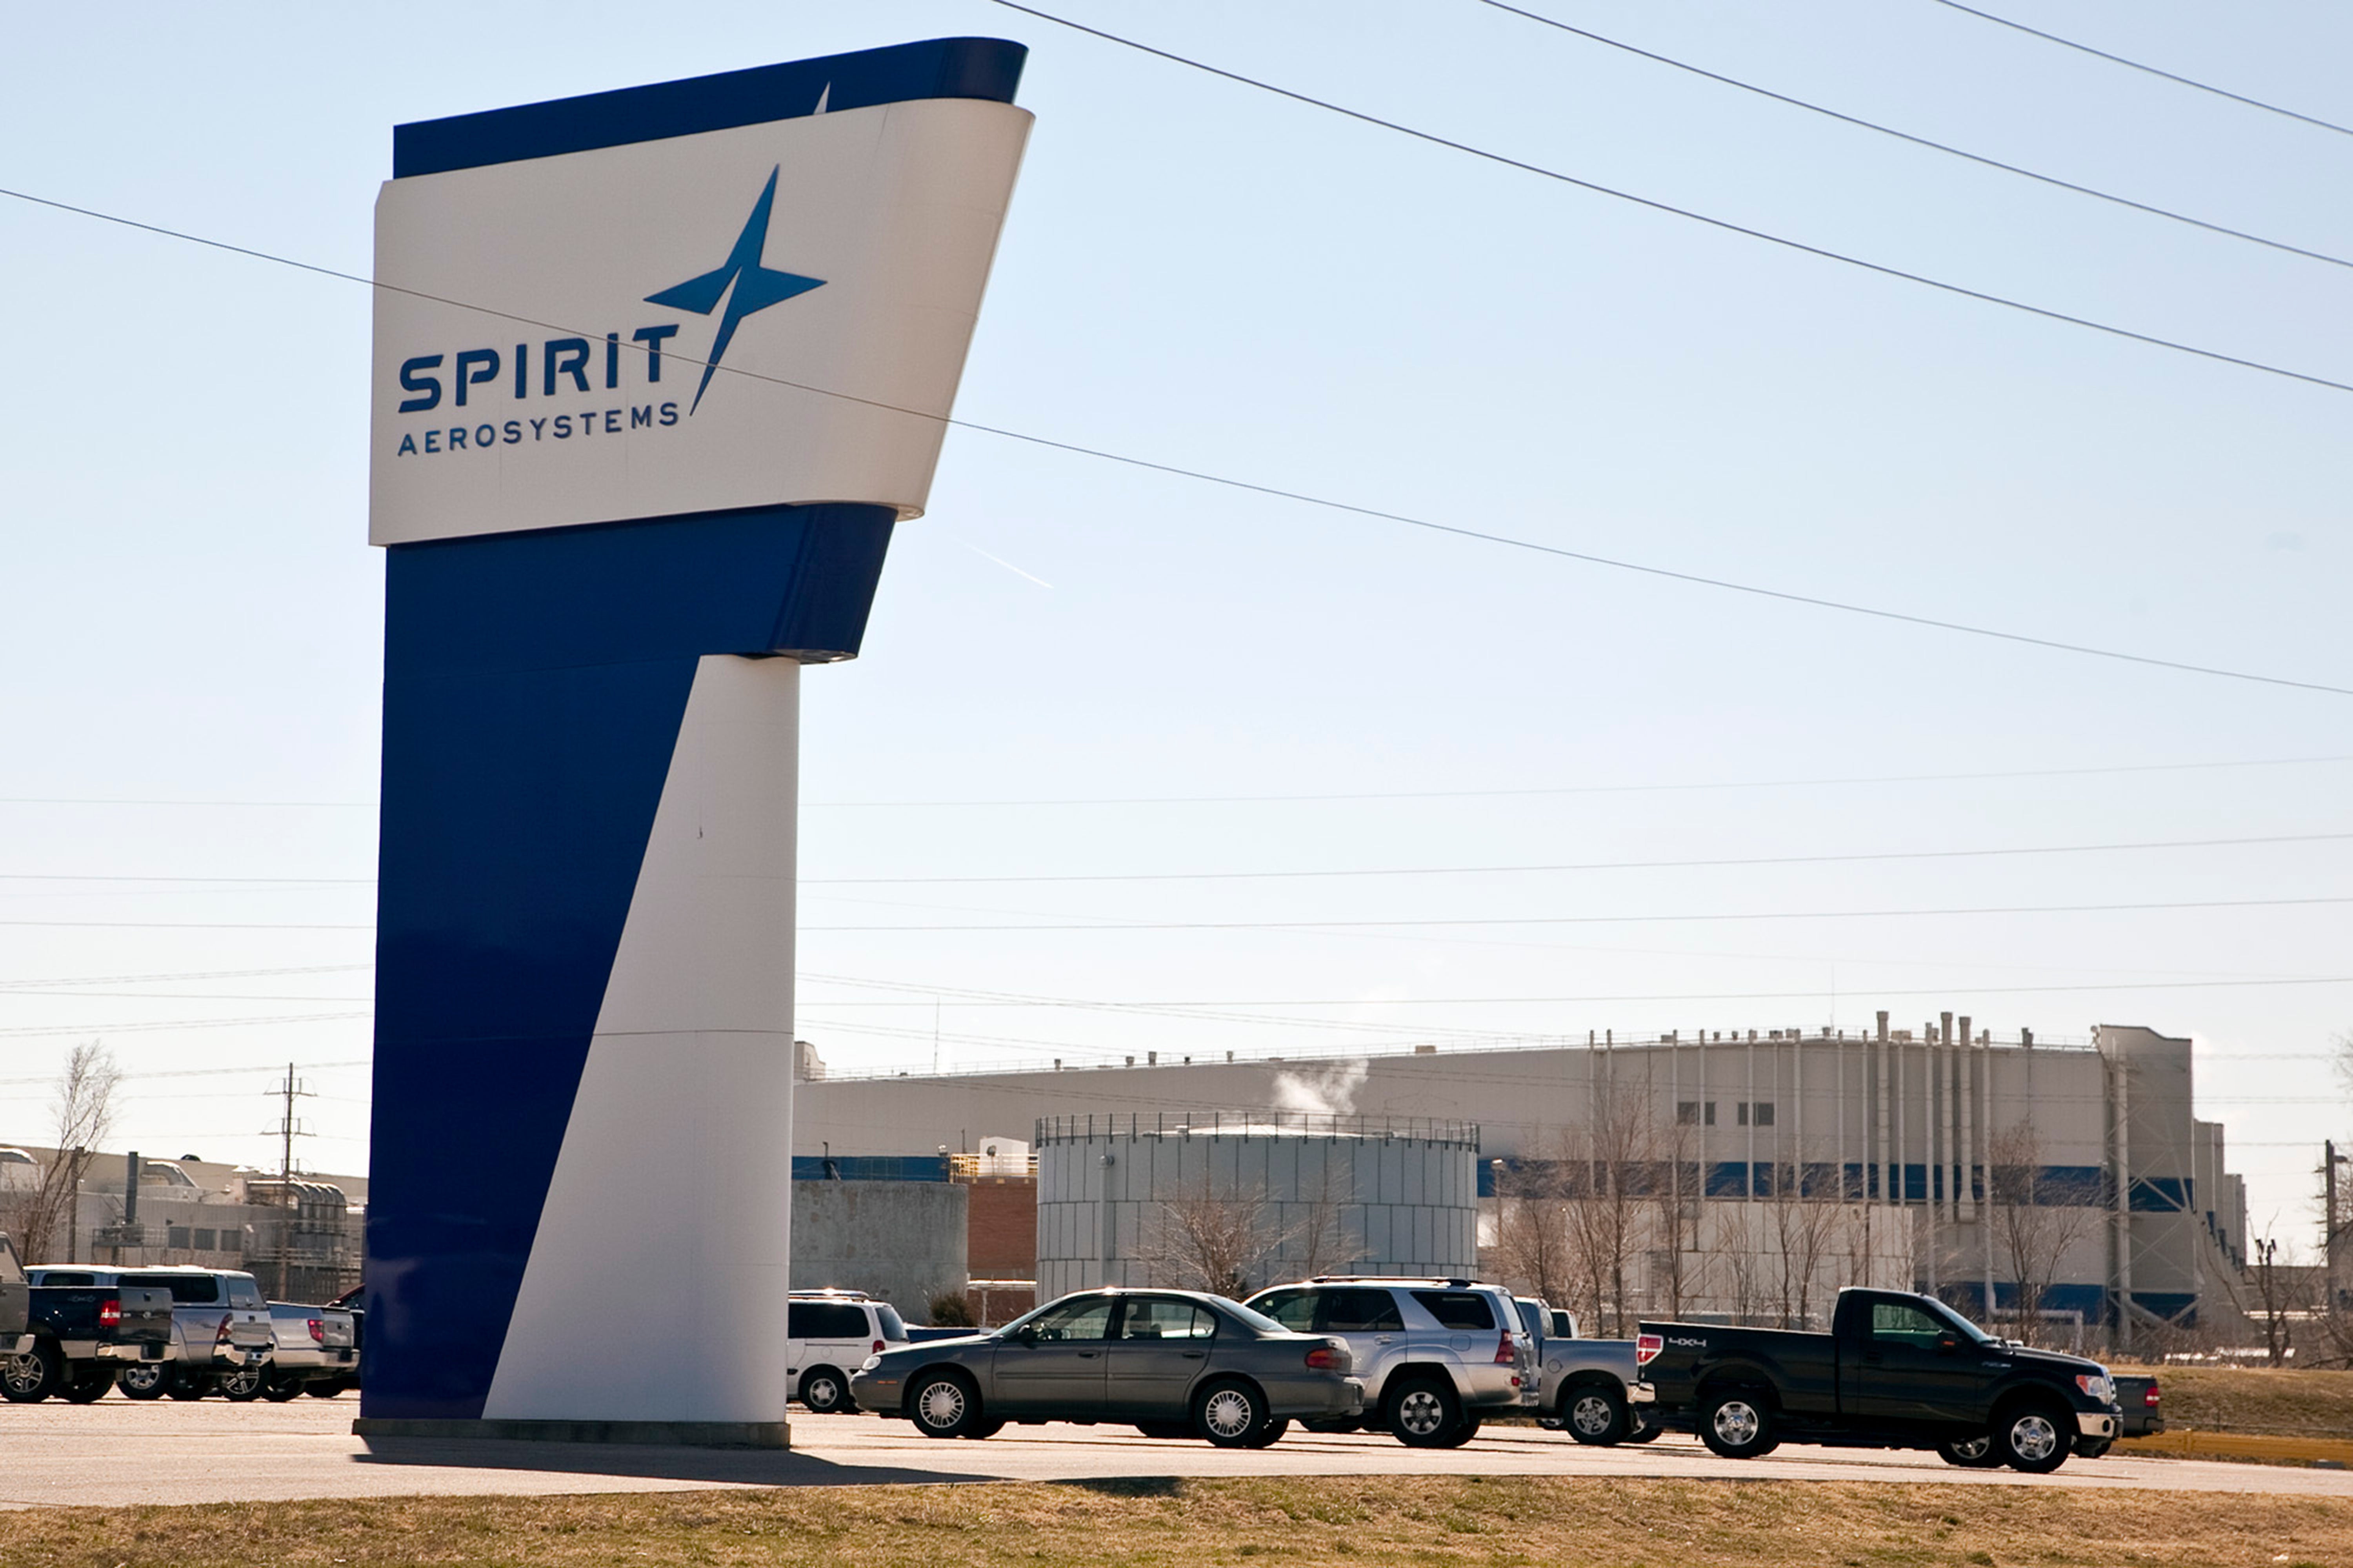 The Spirit AeroSystems sign is seen on July 25, 2013 in Wichita, Kansas.